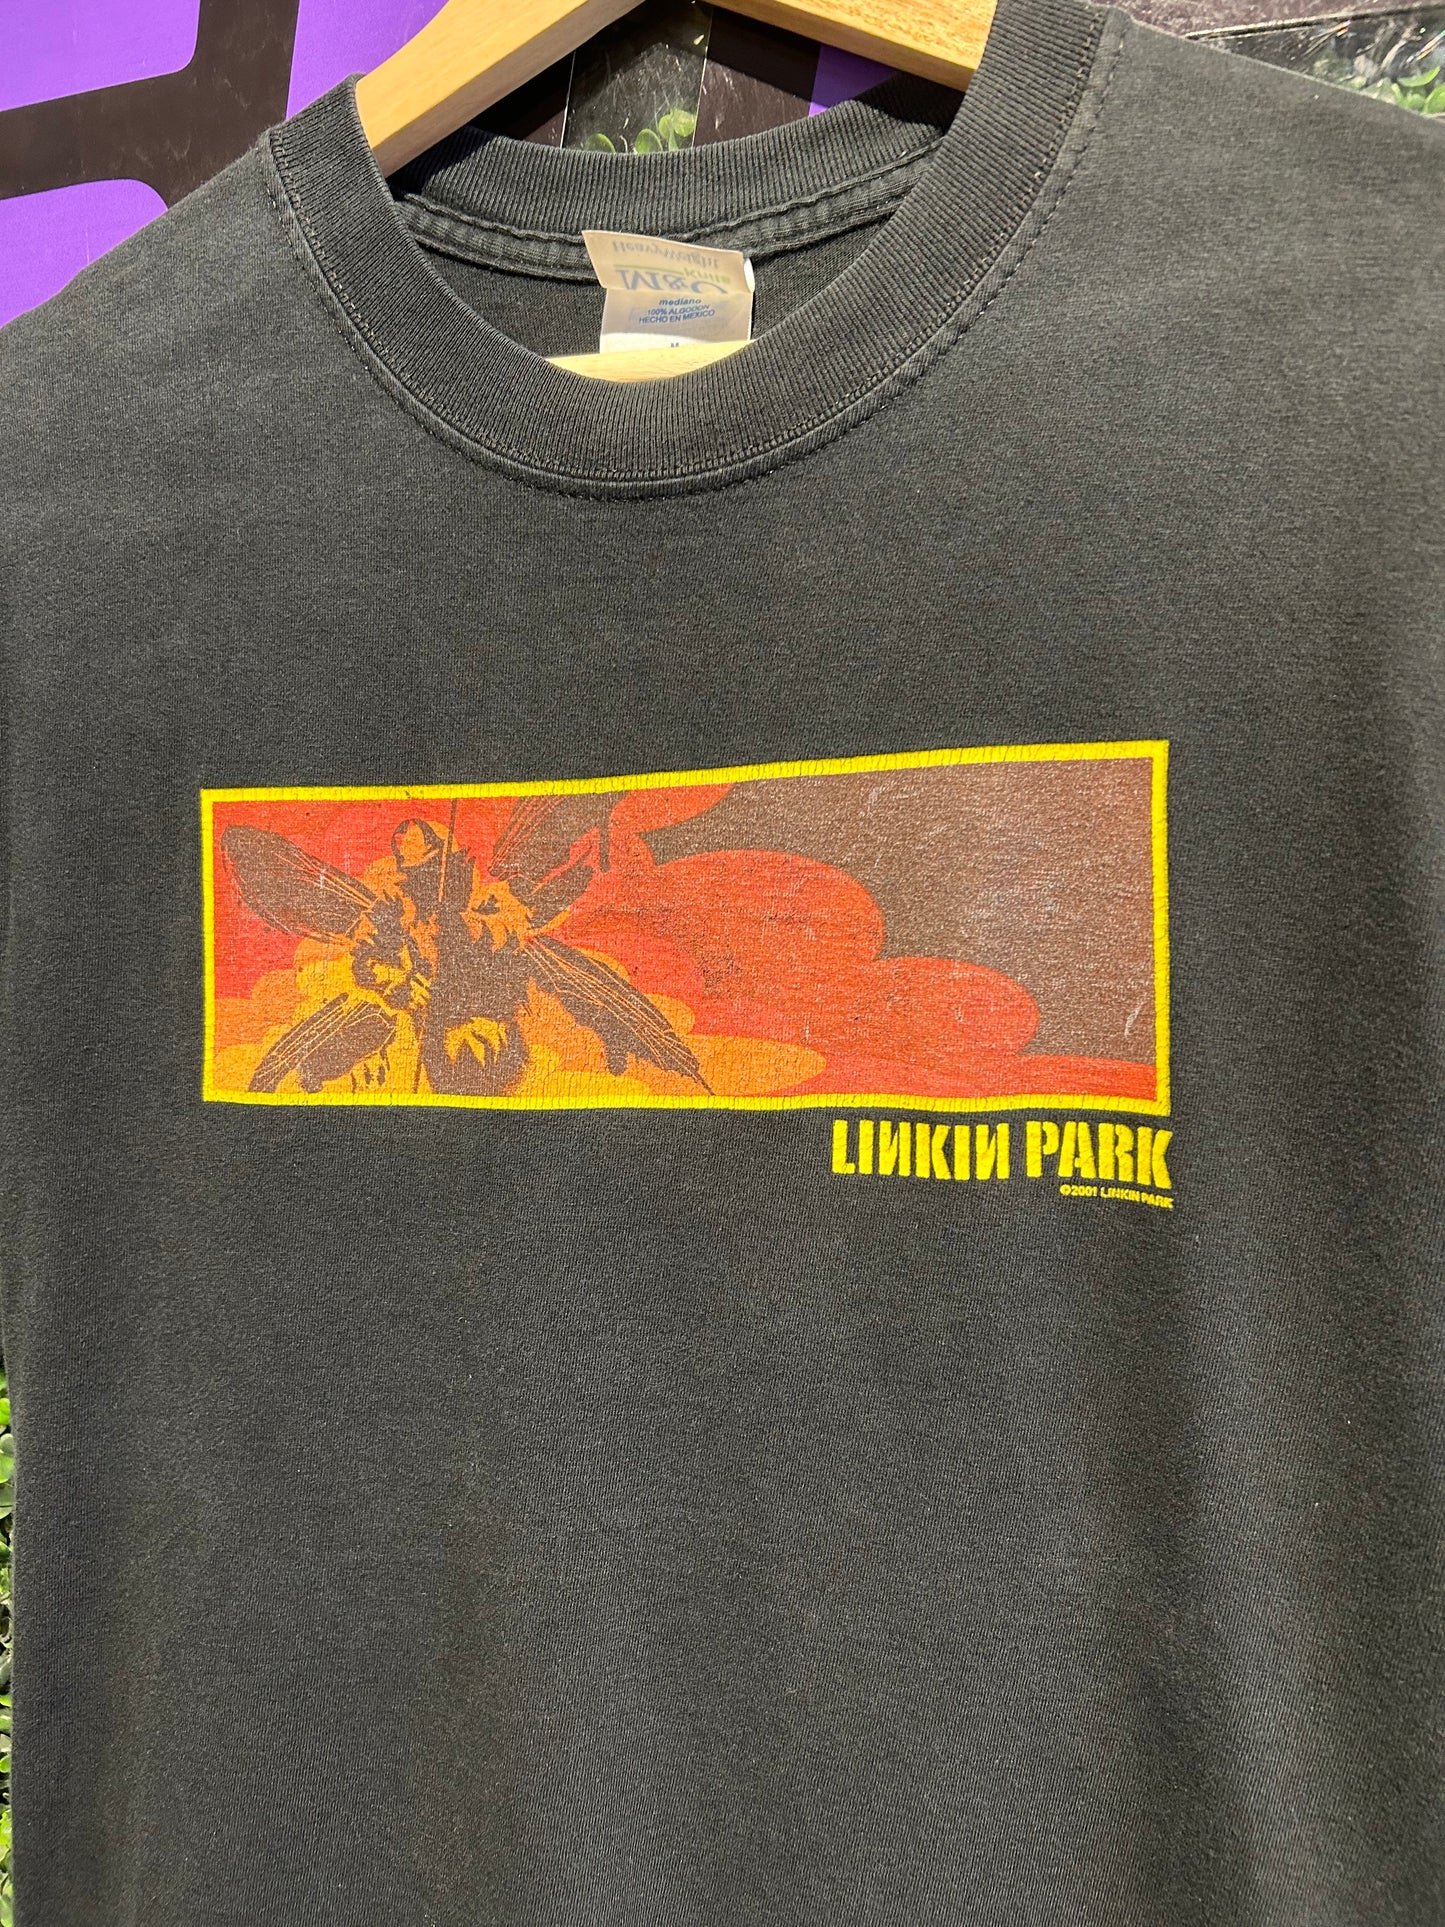 2001 Linkin Park T-Shirt. Size Mediun